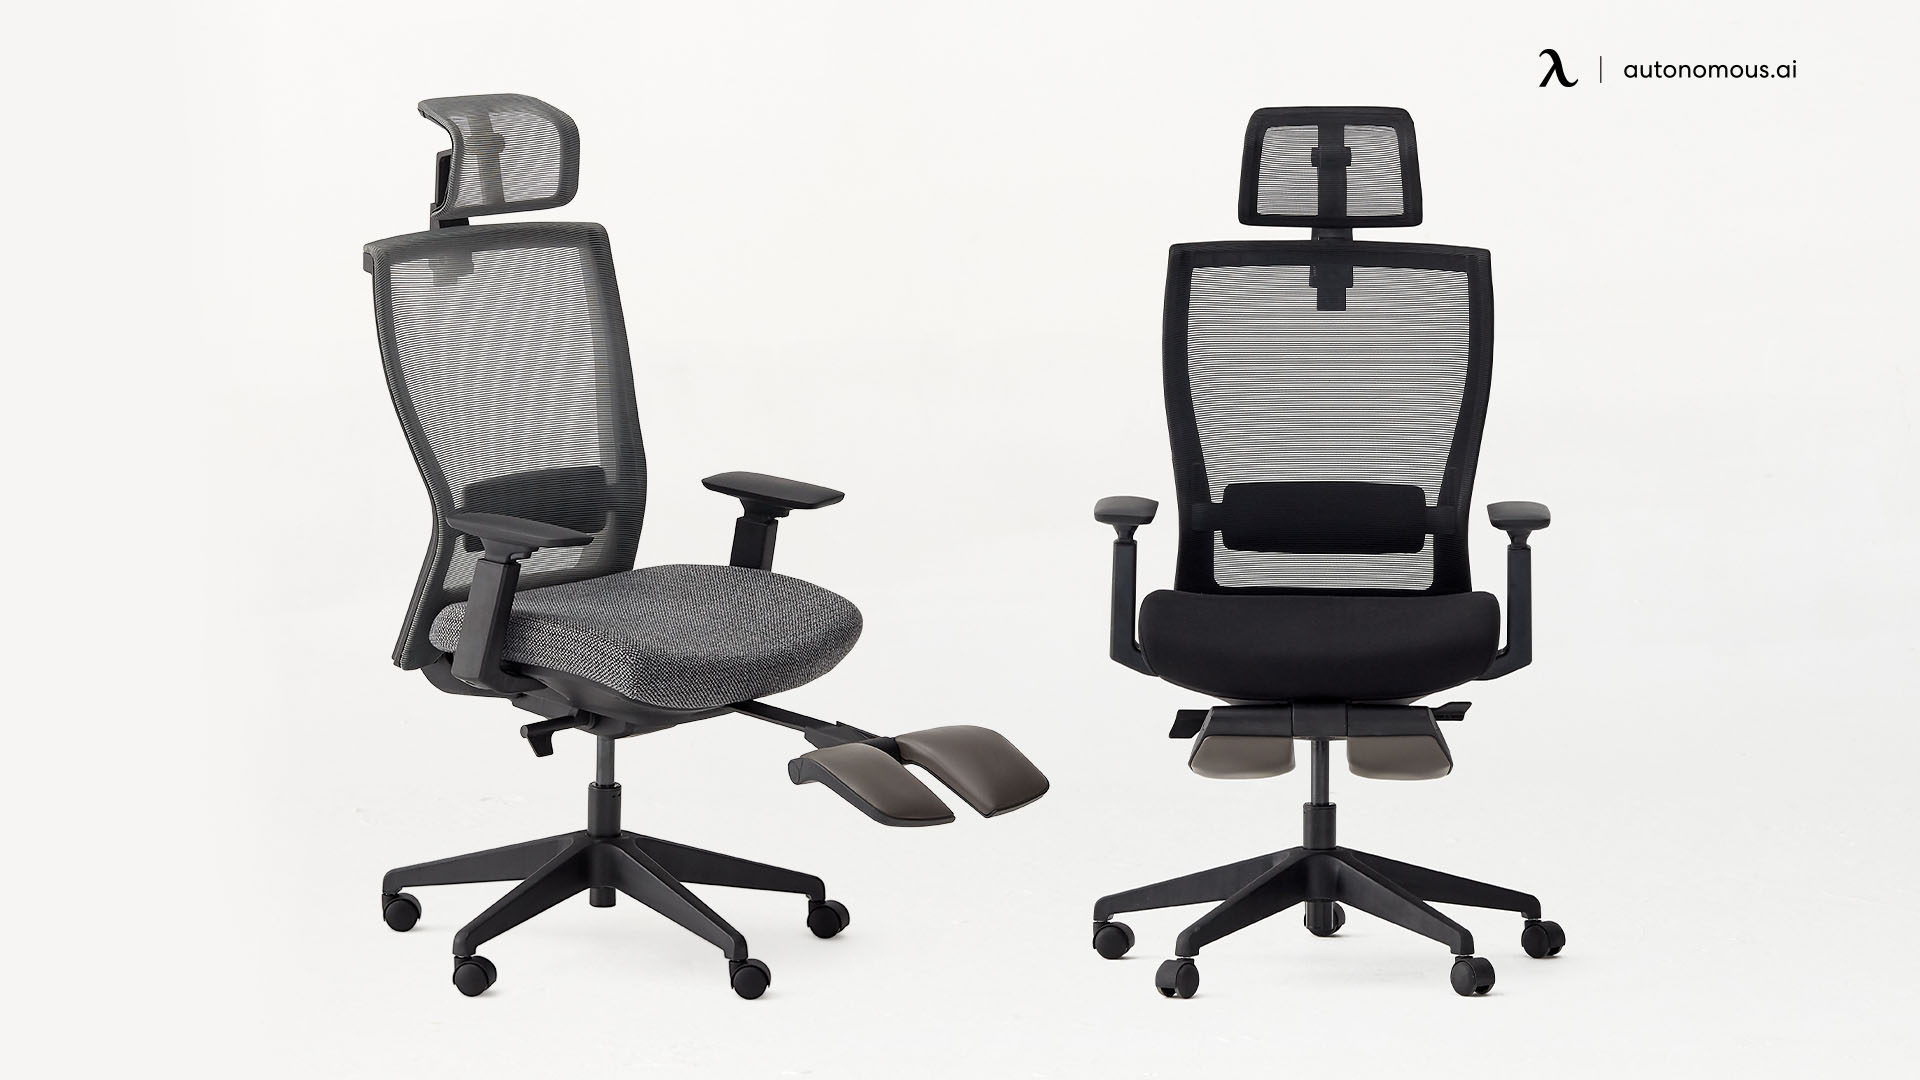 ErgoChair Recline stylish home office chair